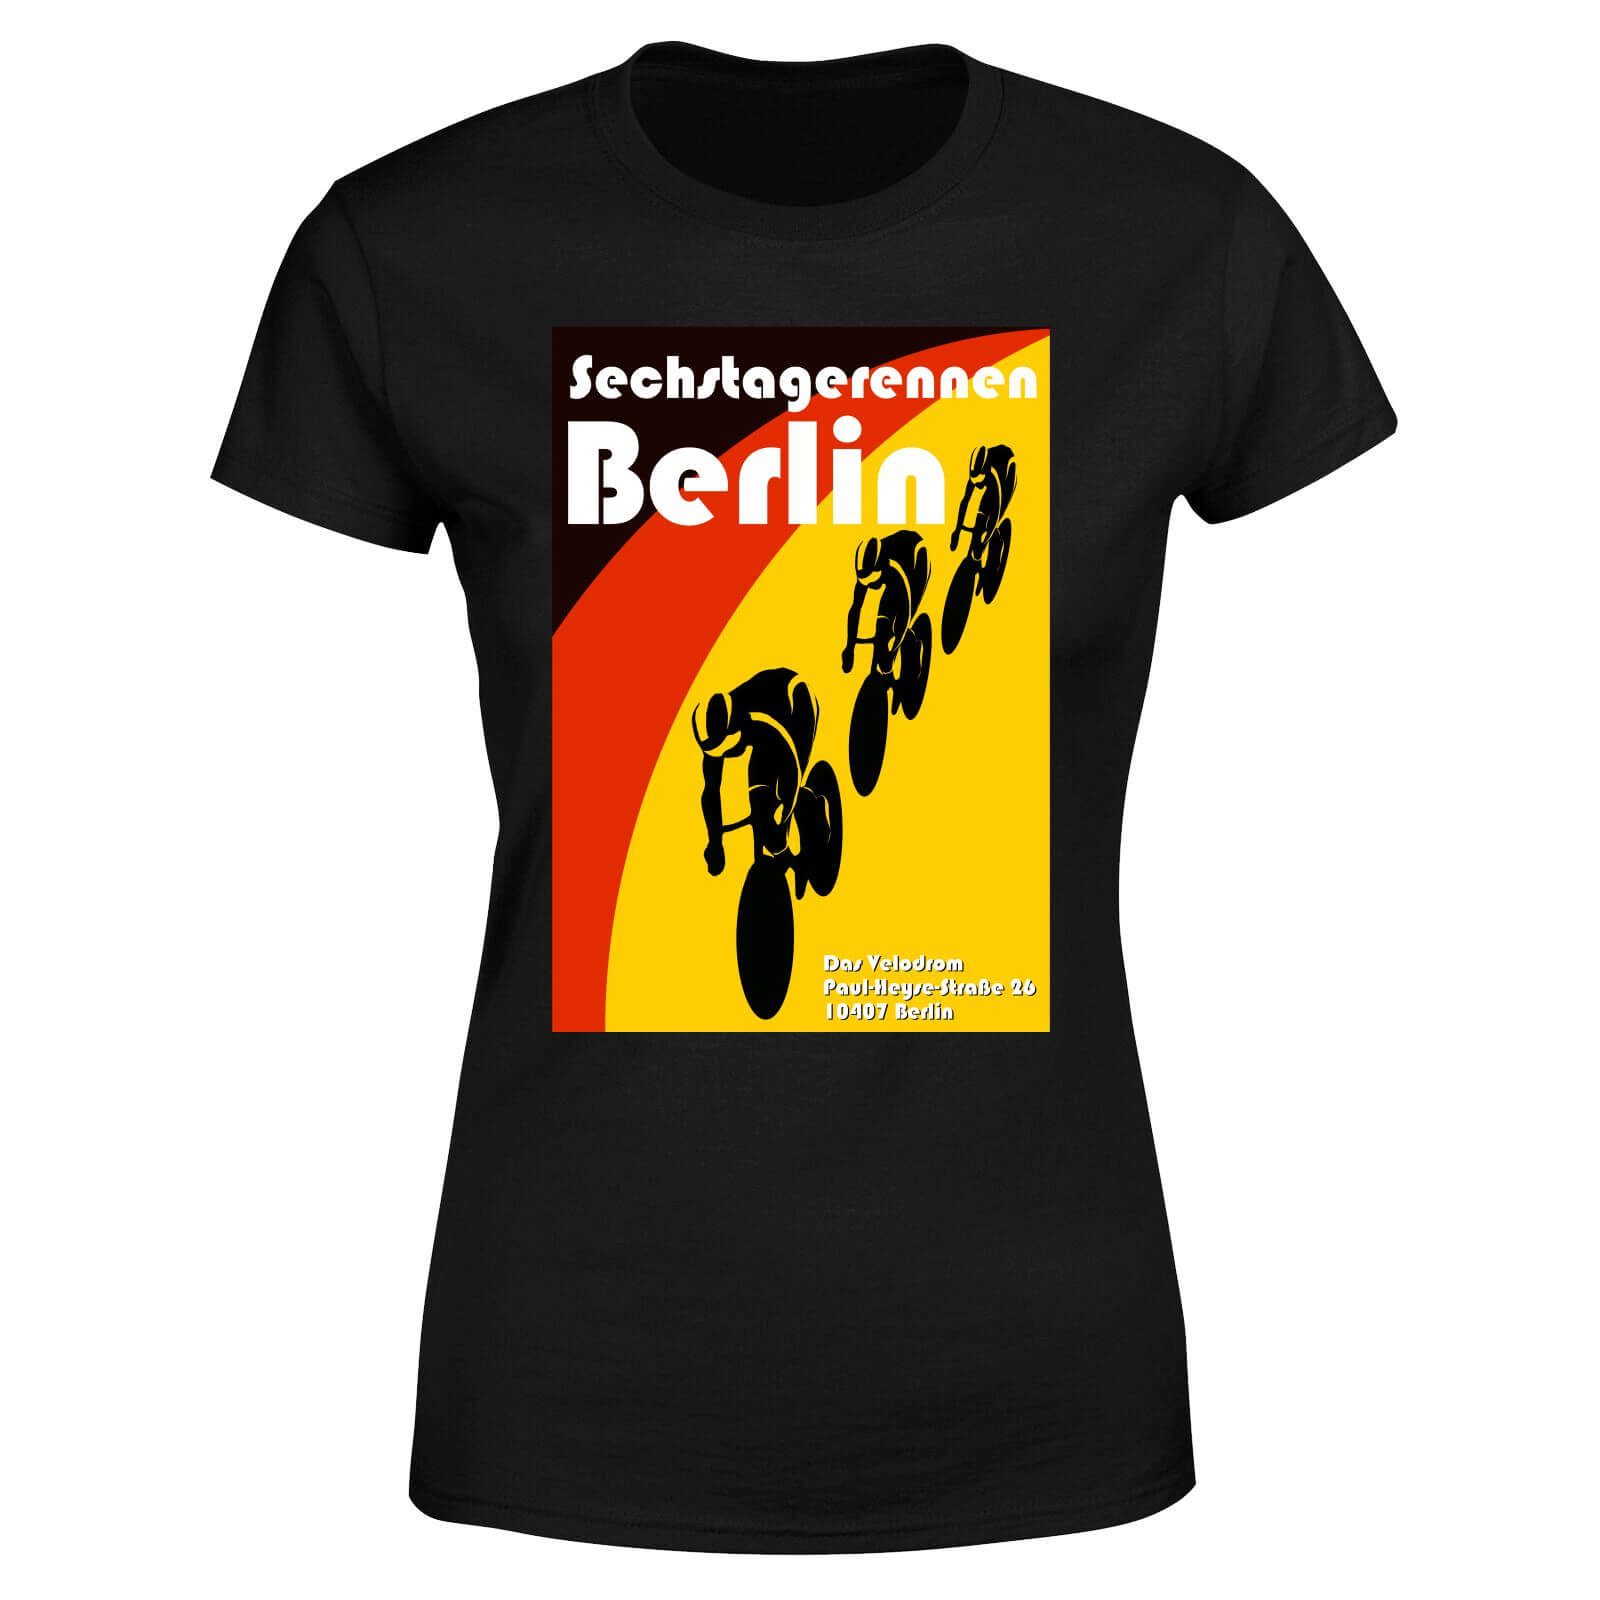 Six Days Berlin Women's T-Shirt - Black - 4XL - Black